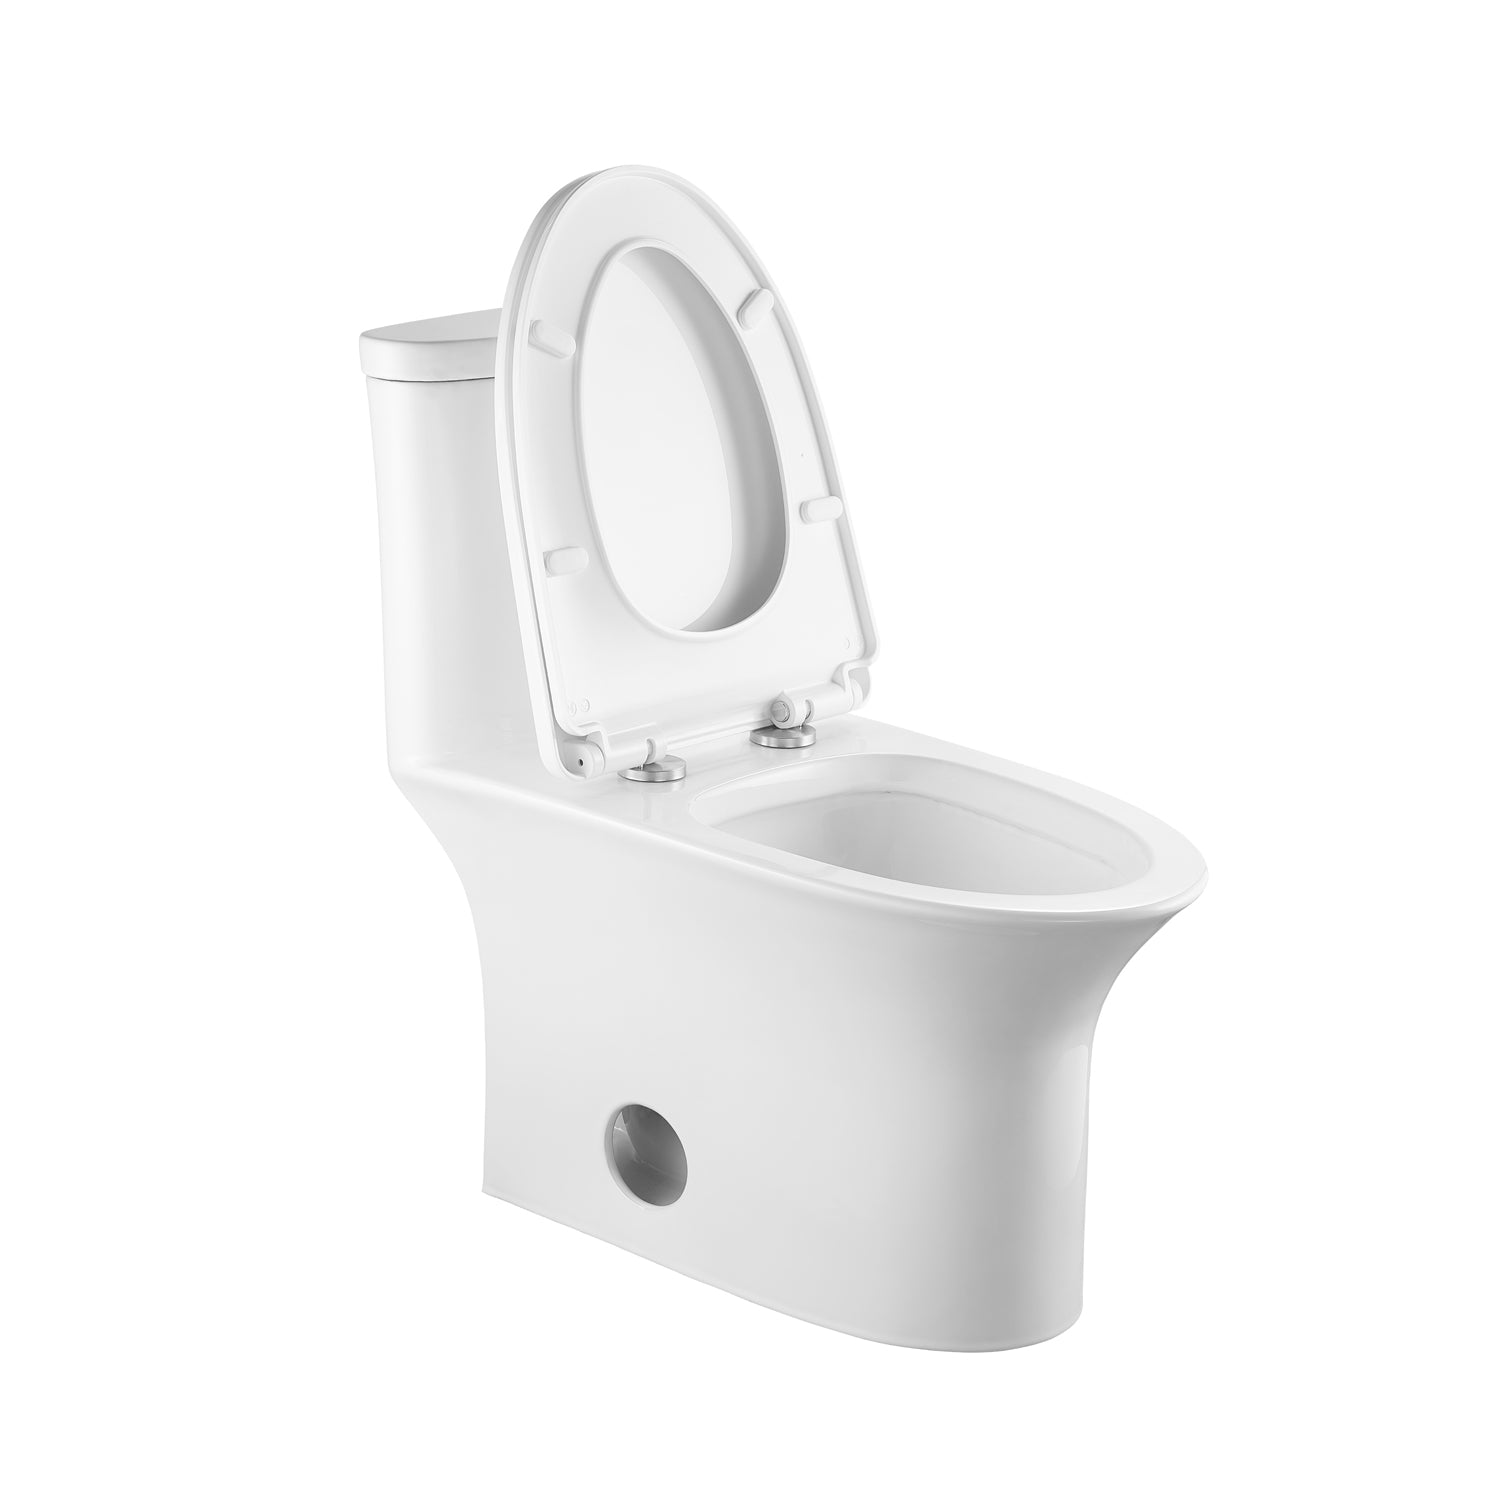 Ibiza 1.6/1.1 GPF Dual Flush Elongated One-Piece Toilet in White